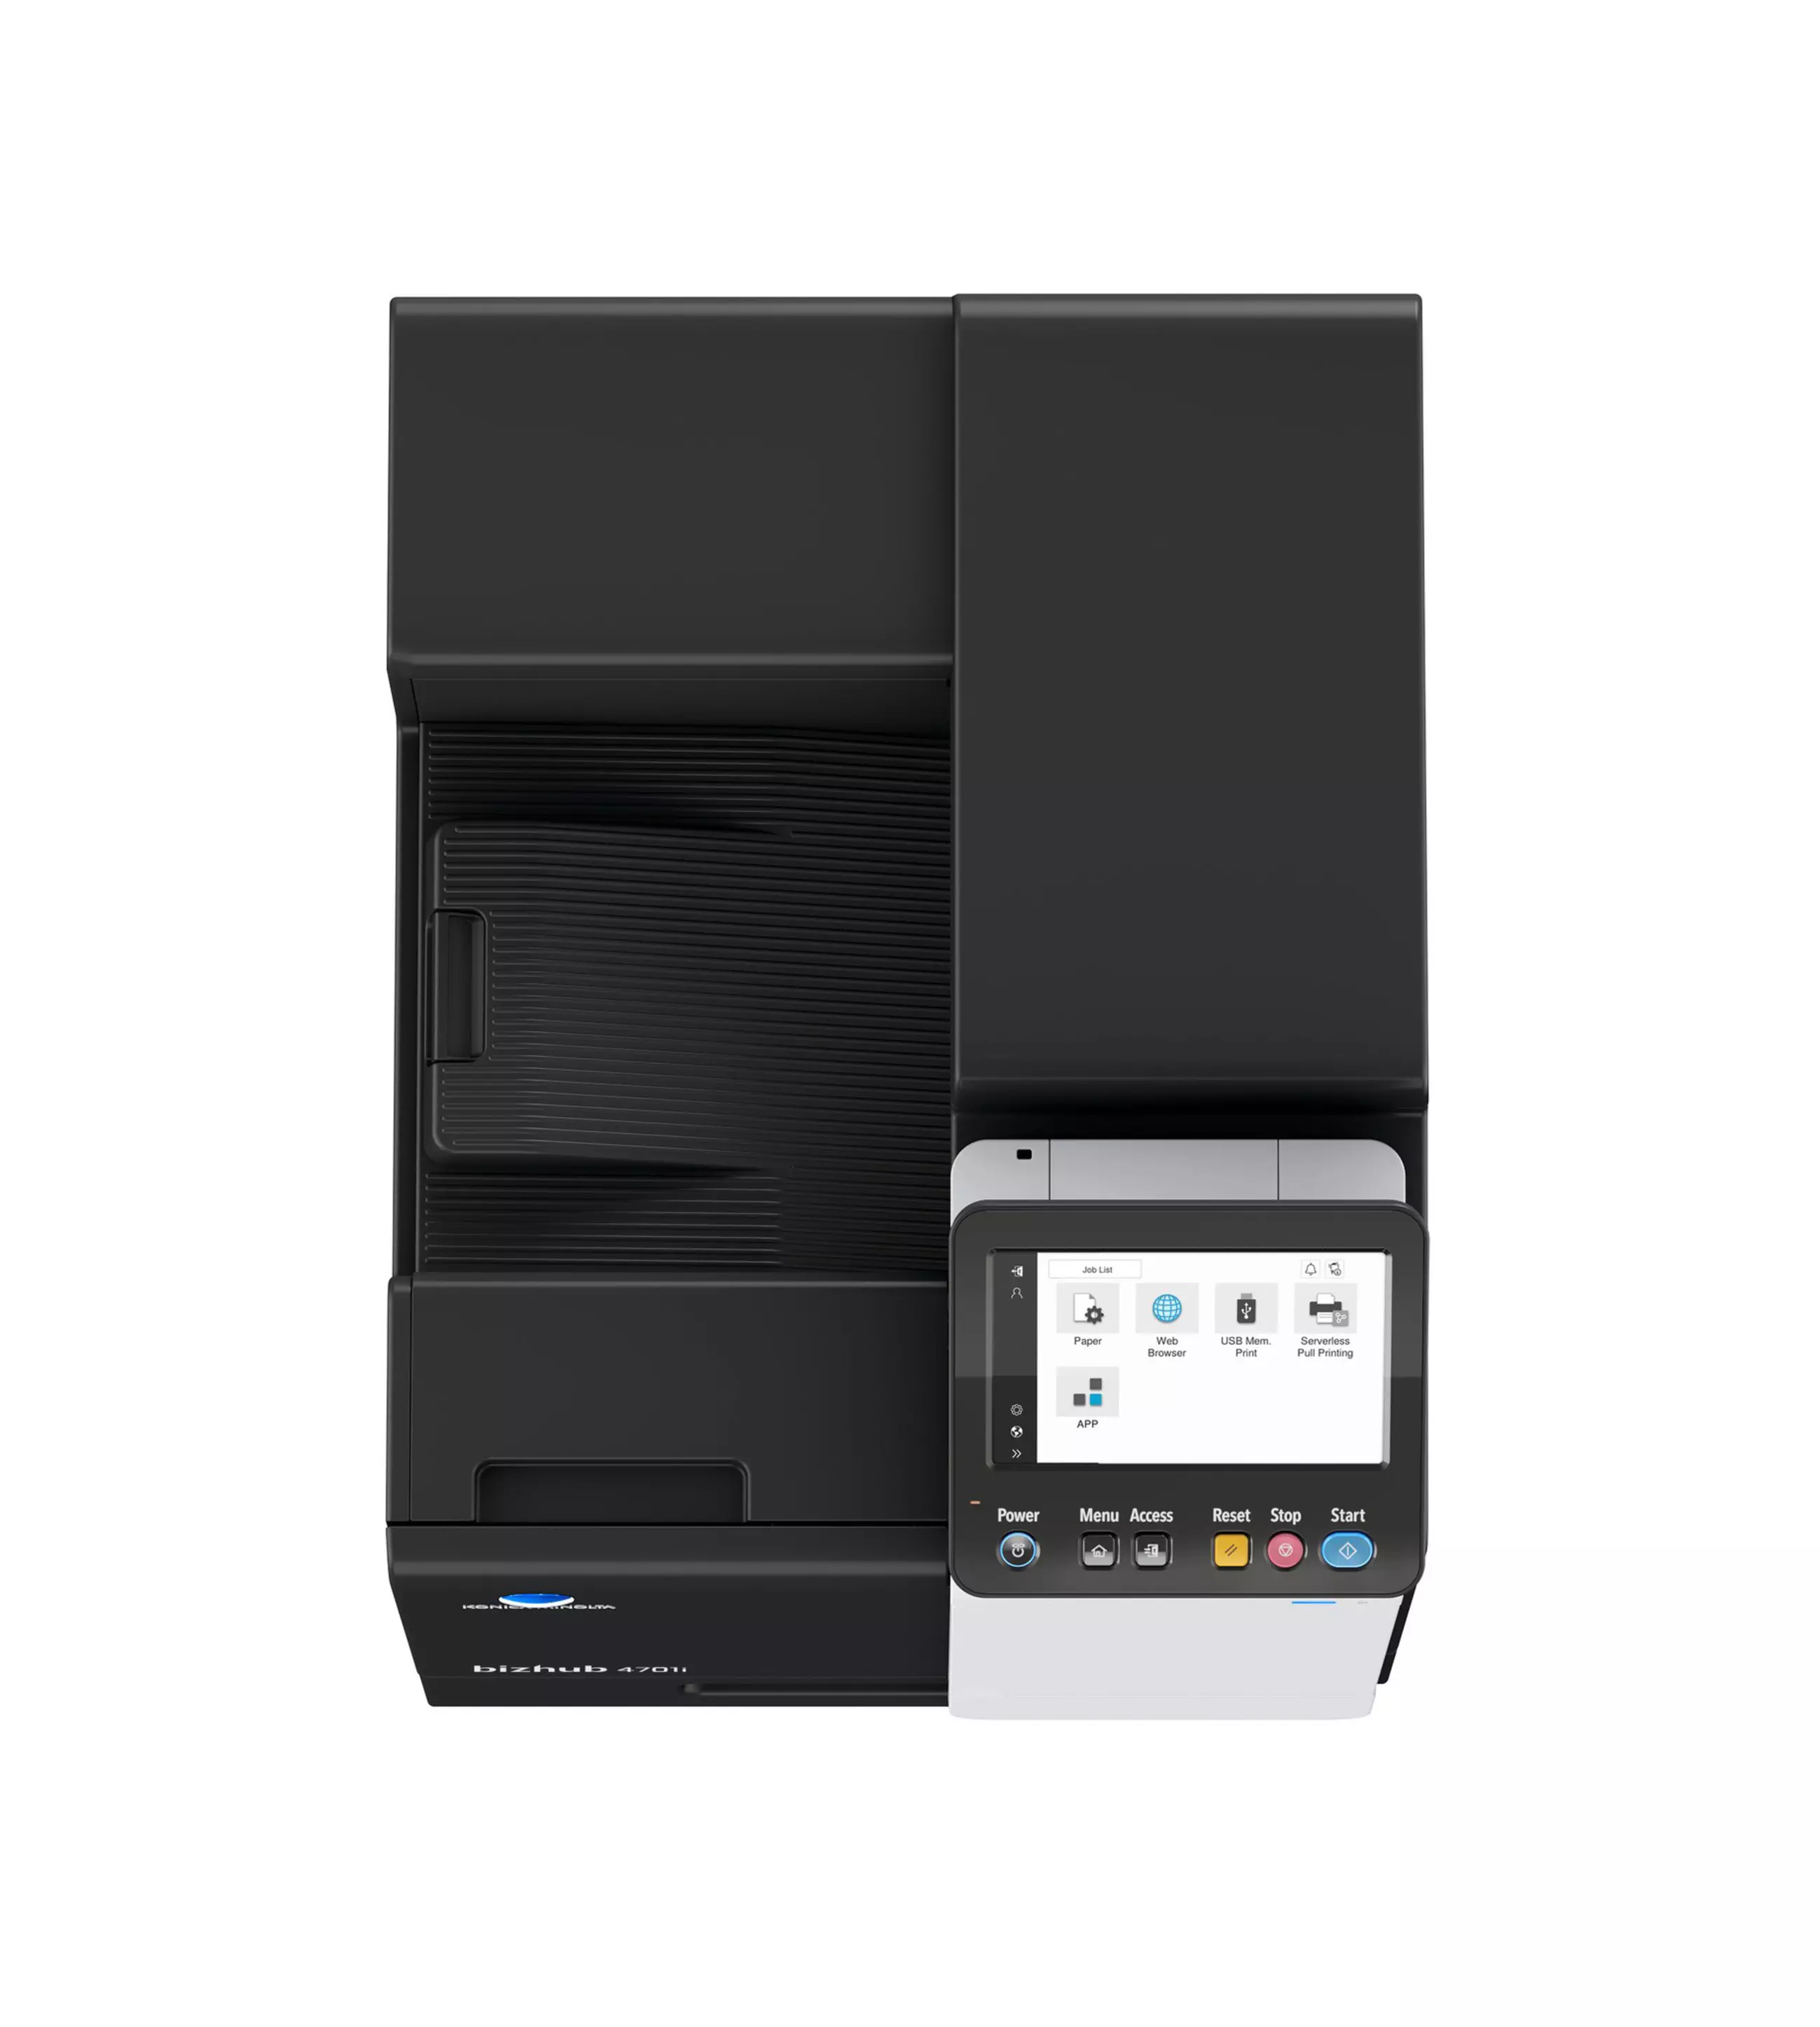 Konica Minolta i-series bizhub 4701i multifunctional printer